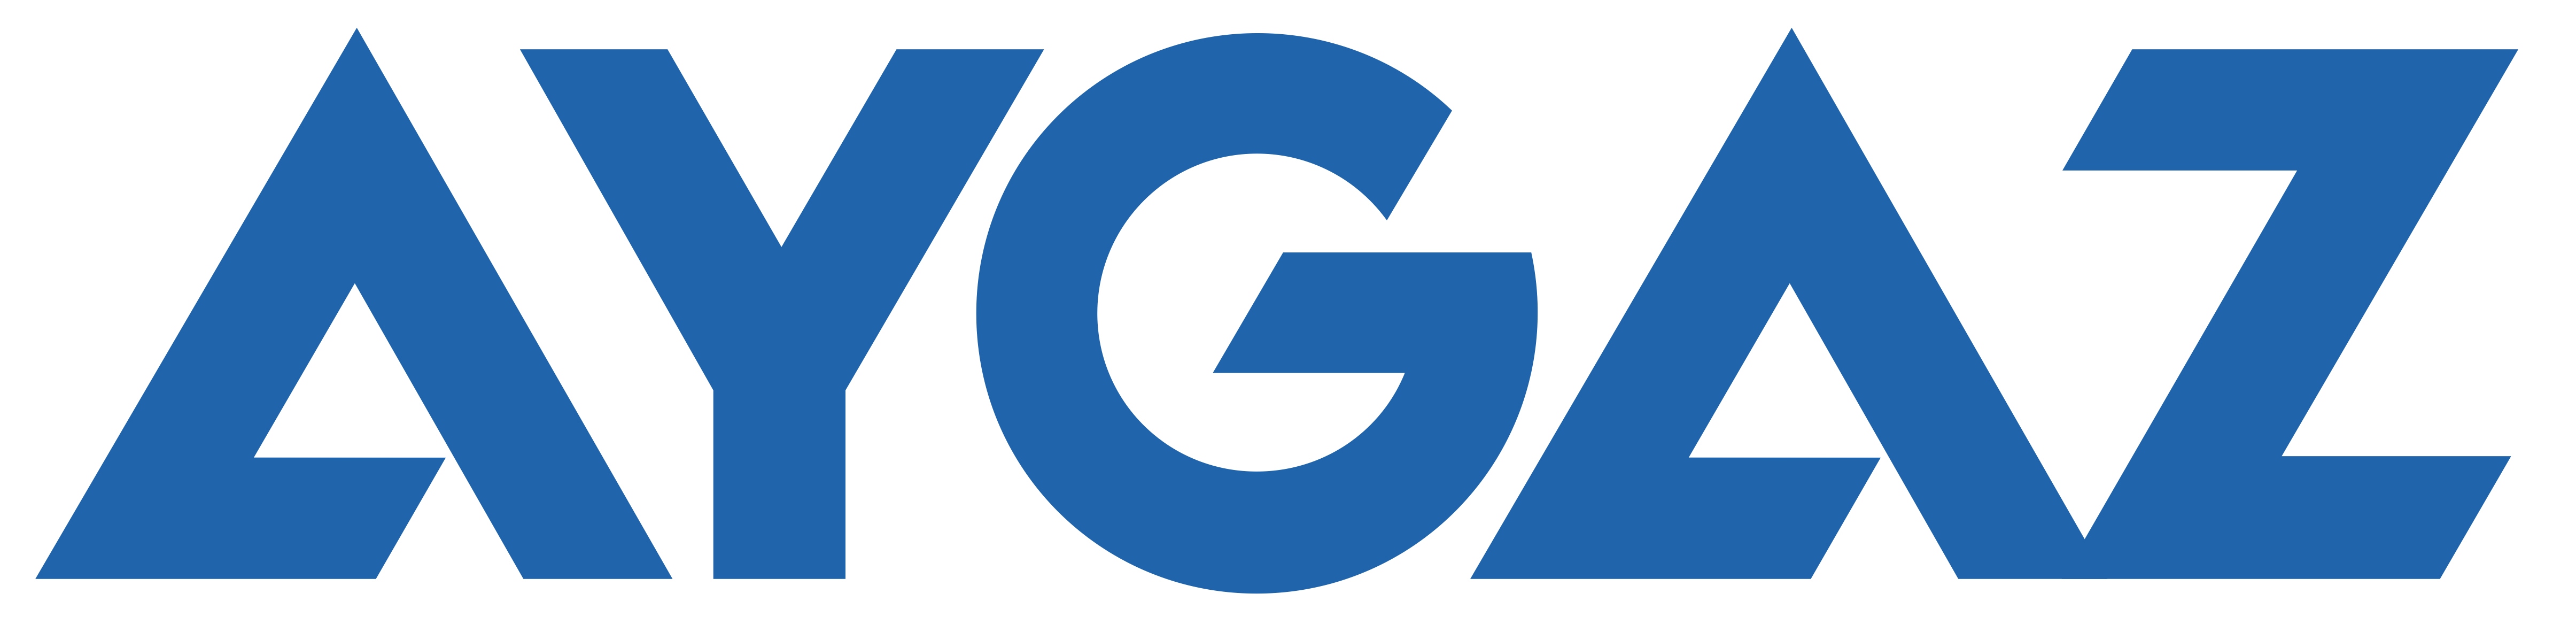 aygaz logo photo - 1